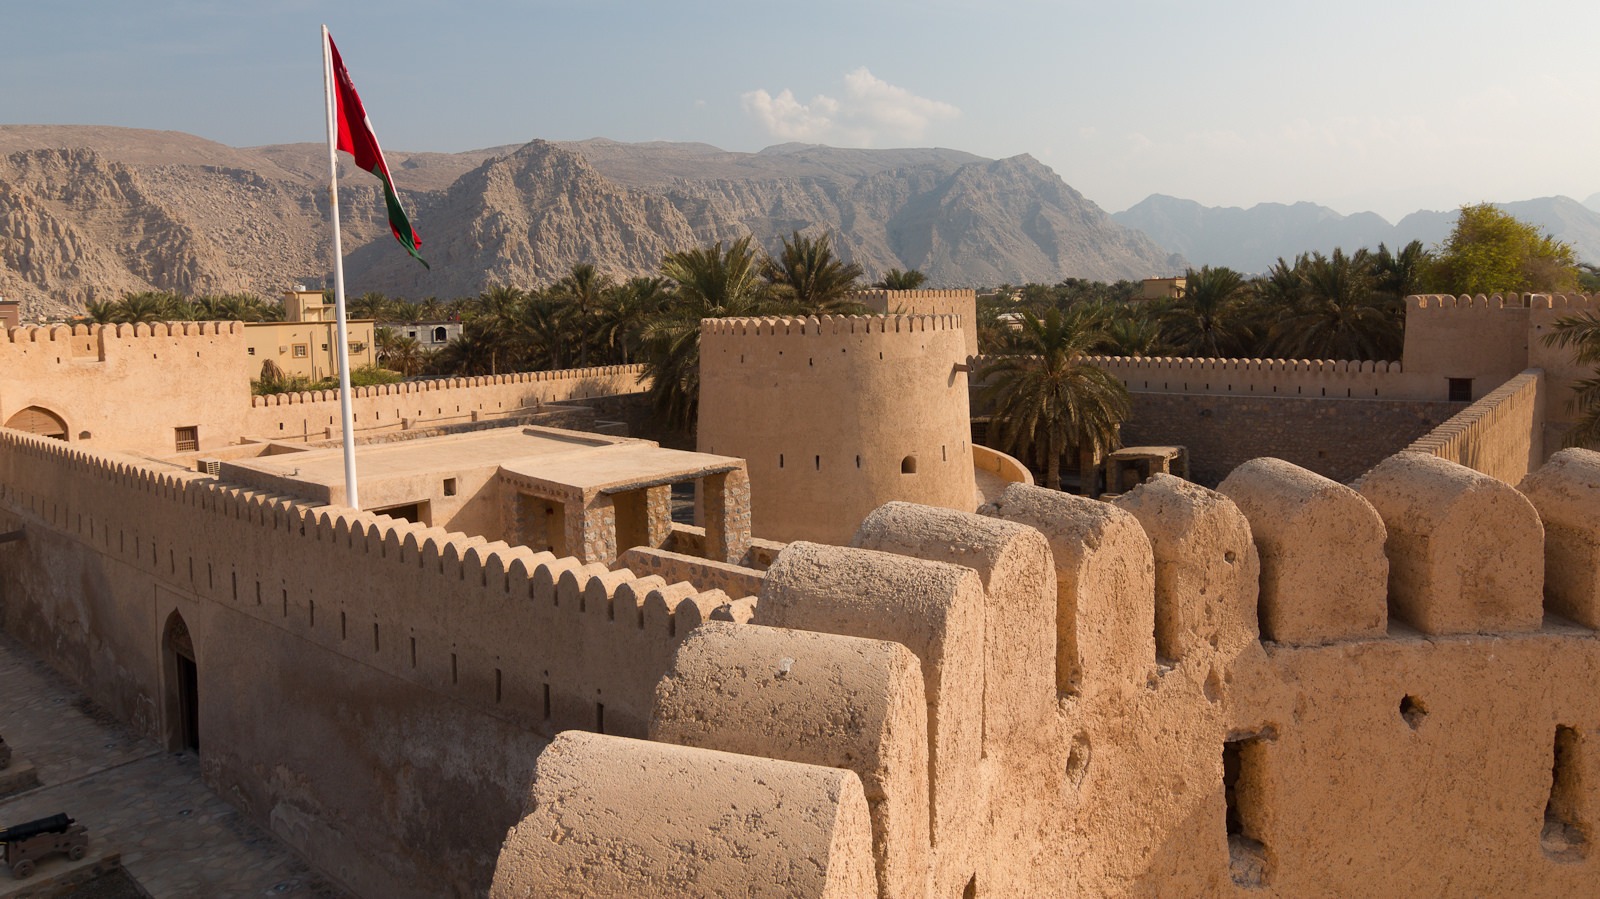 Khasab Fort (22997720081) (cropped).jpg